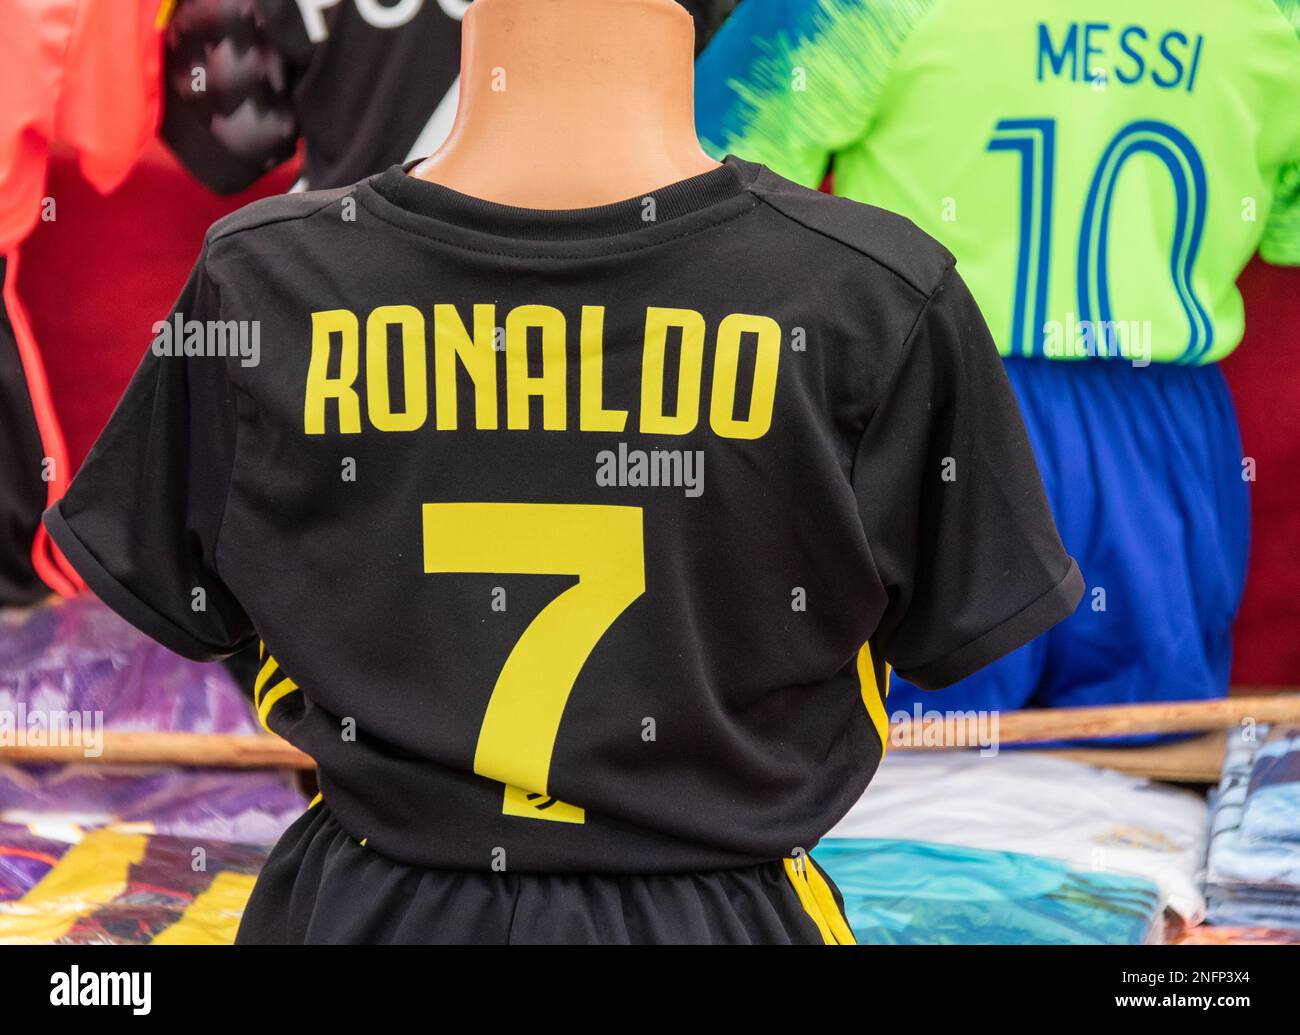 Ronaldo t shirt hi-res stock photography and images - Alamy